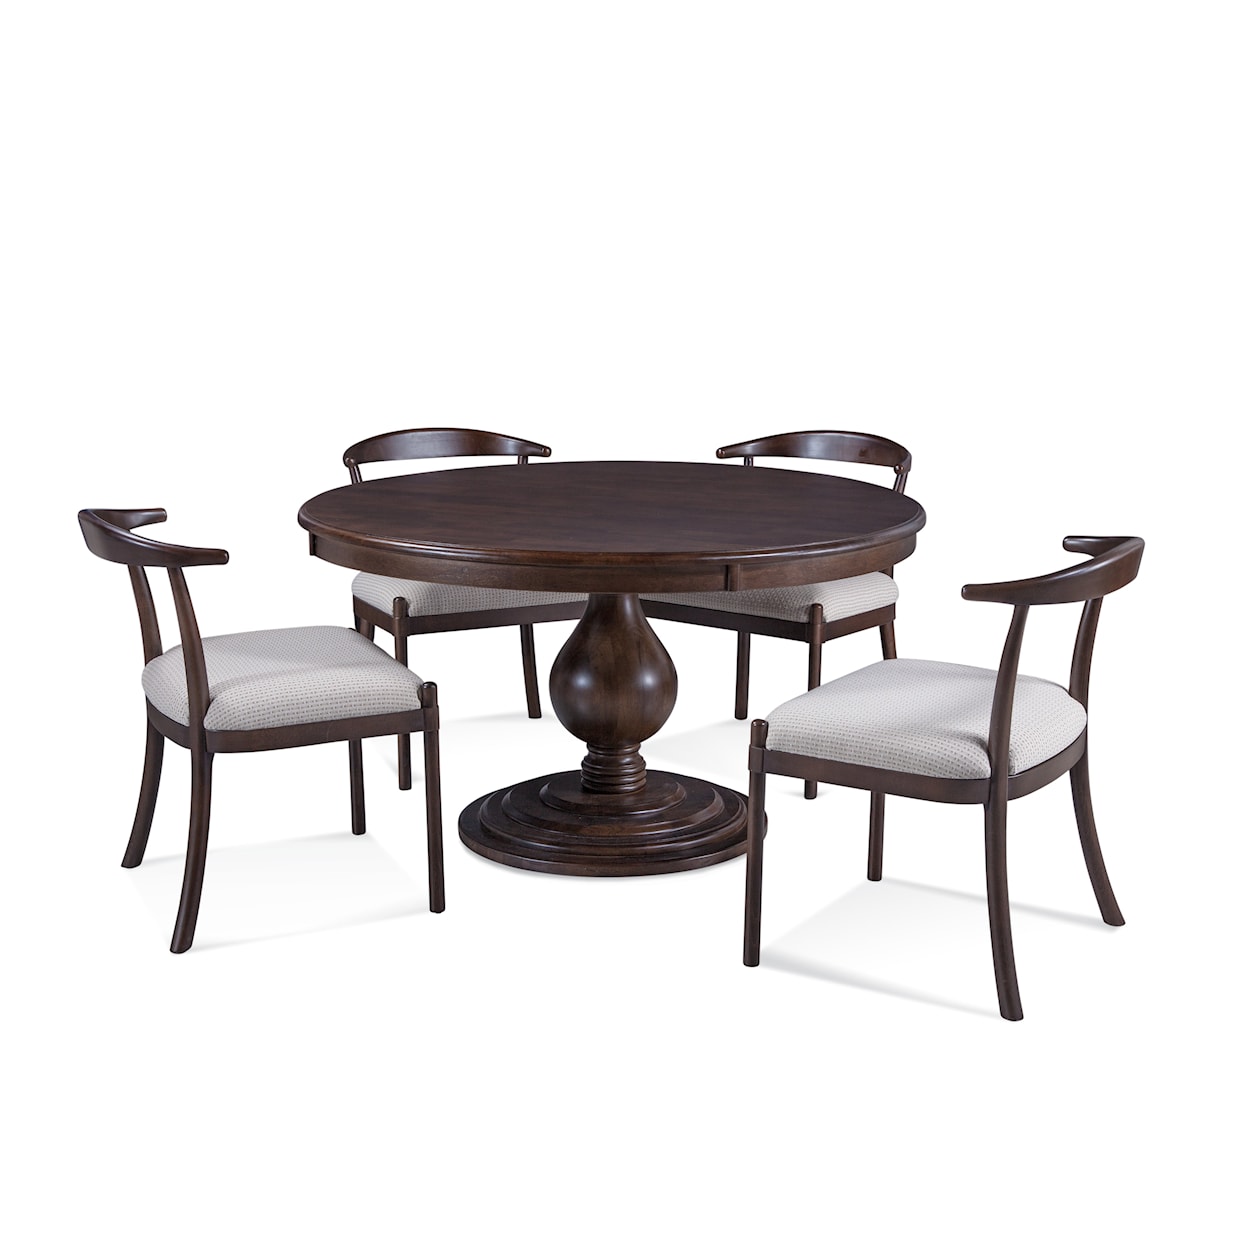 Braxton Culler Douglas Douglas 48" Round Pedestal Dining Table